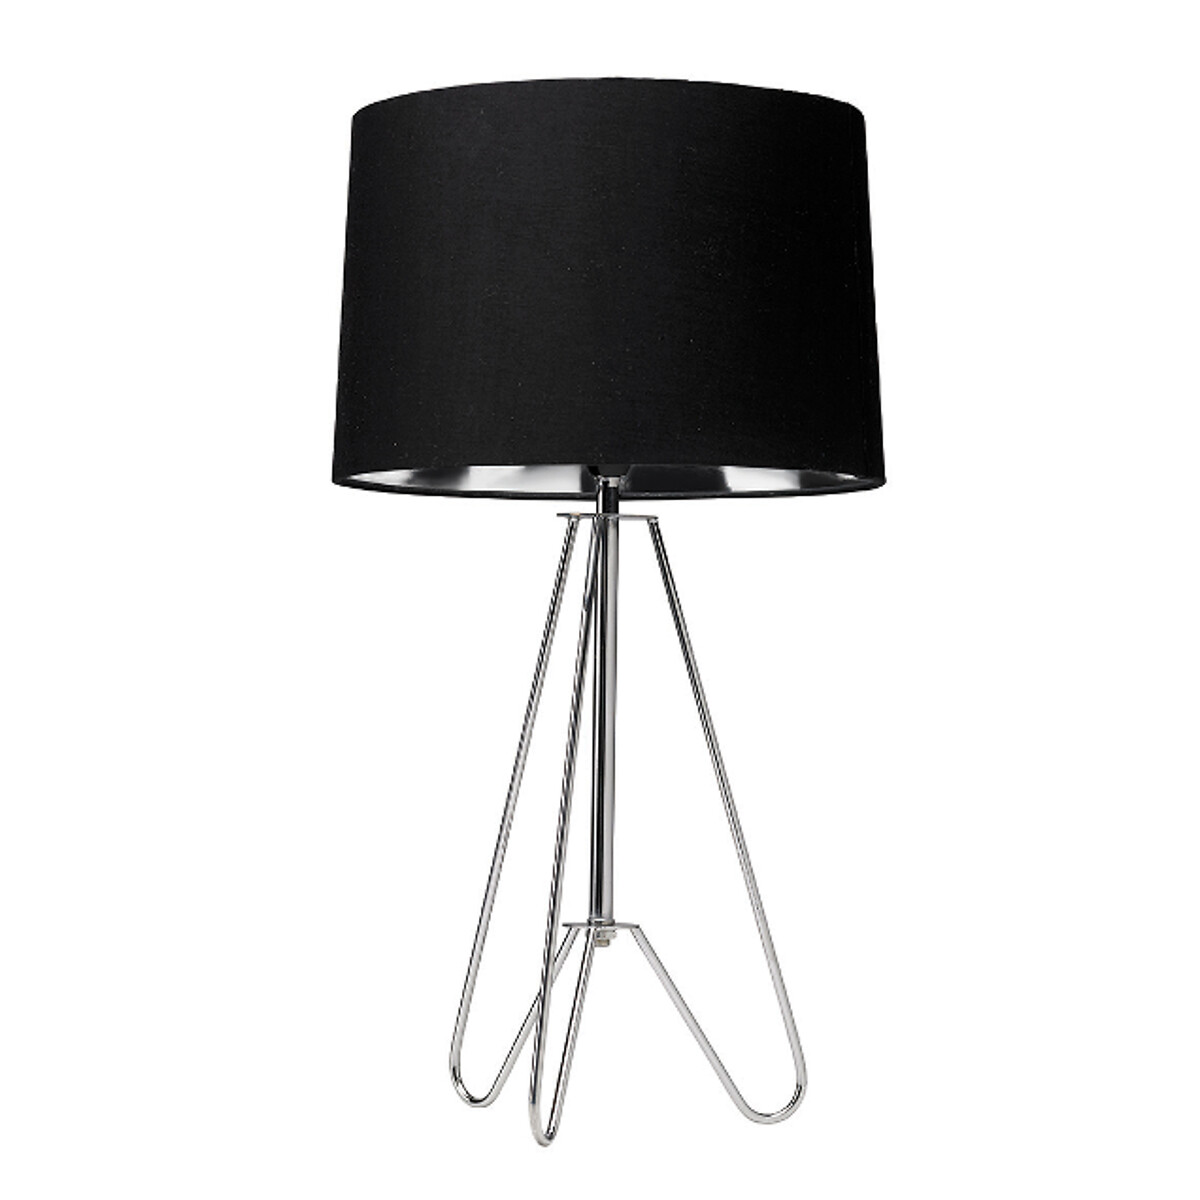 Chrome Metallic Wire Tripod Table Lamp, Black And Chrome Tripod Table Lamp